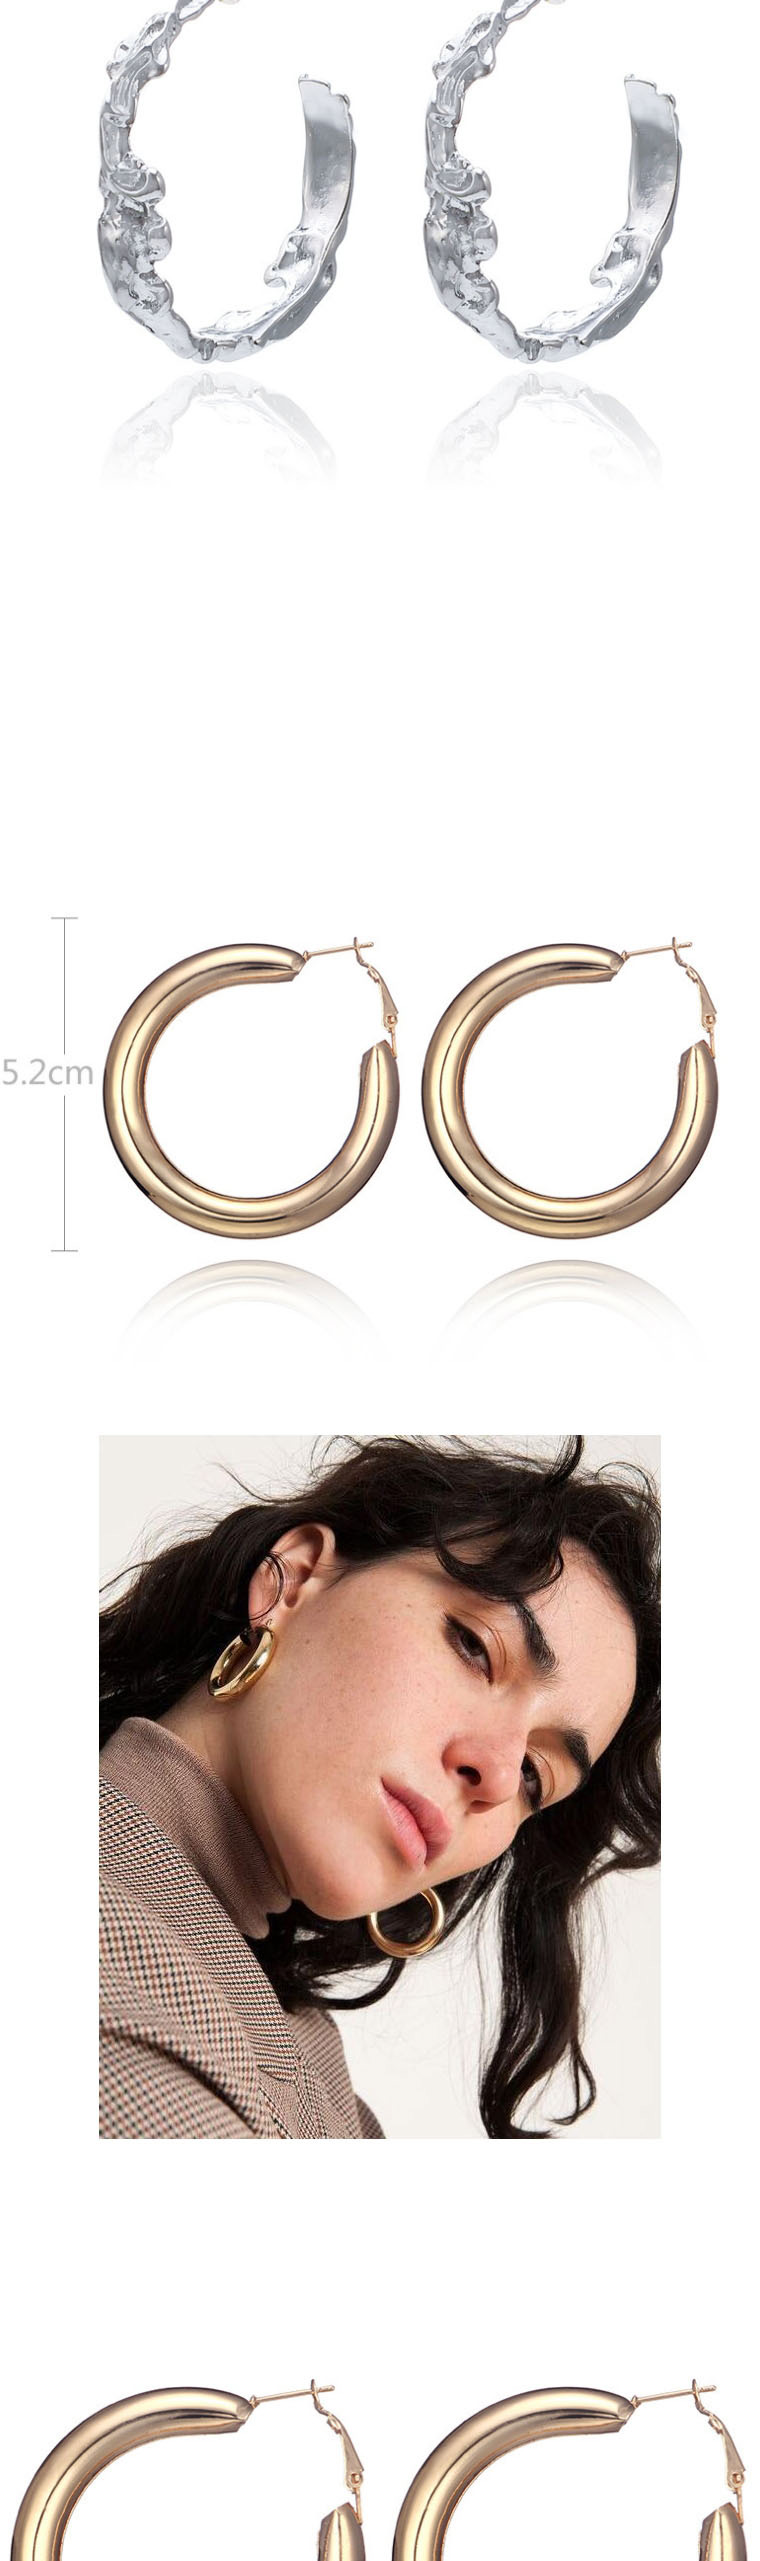 Fashion Silver Glossy Irregular Concave Circle Pierced Earrings,Stud Earrings